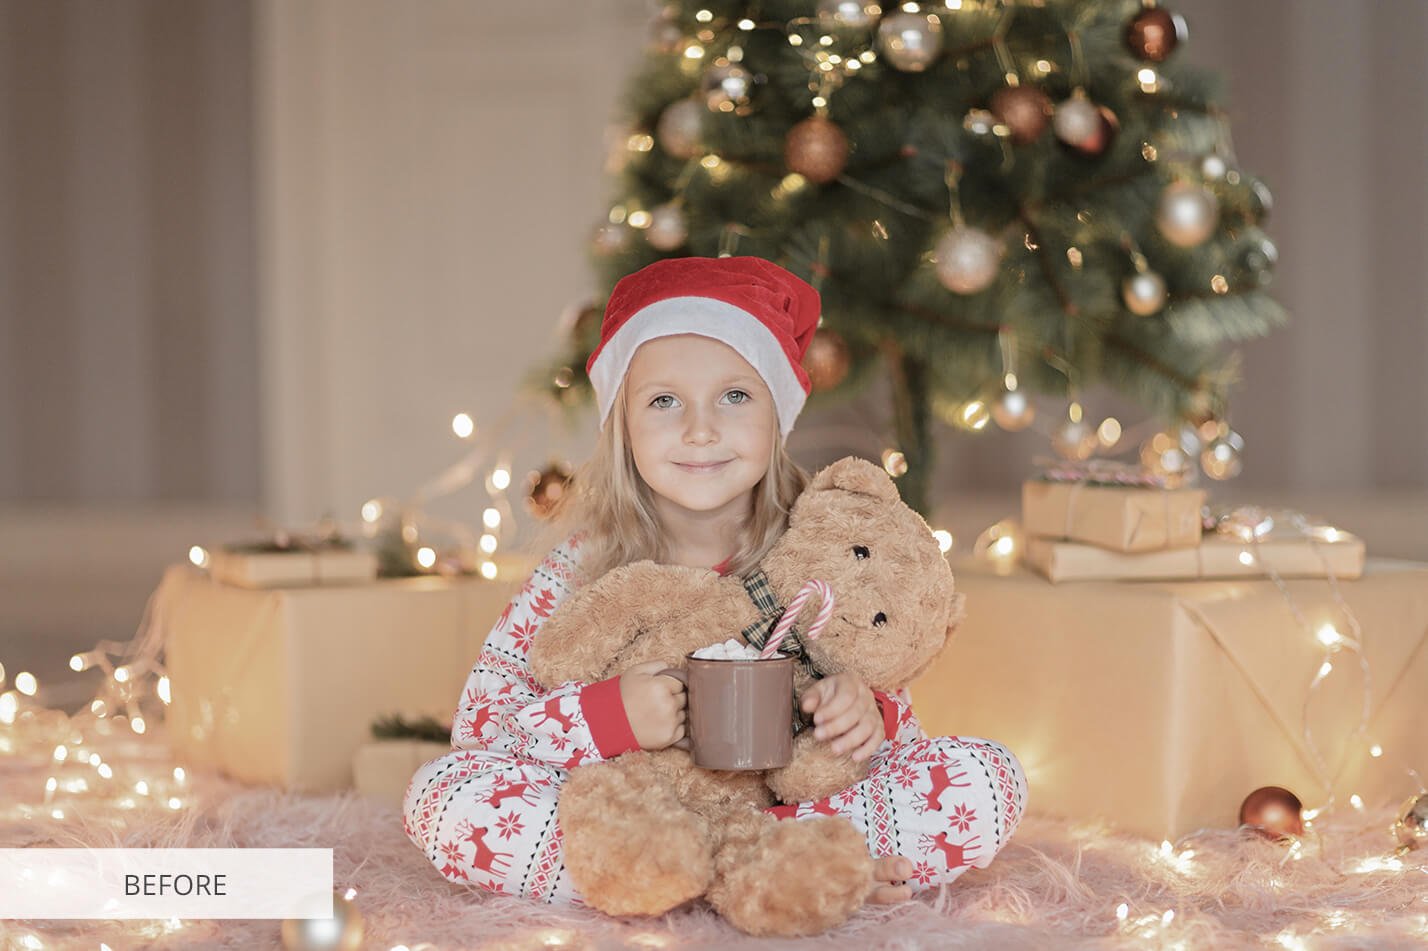 child christmas pajamas holiday kid girl decoration gift santa winter eve present home person light t20 xrrxz2 31